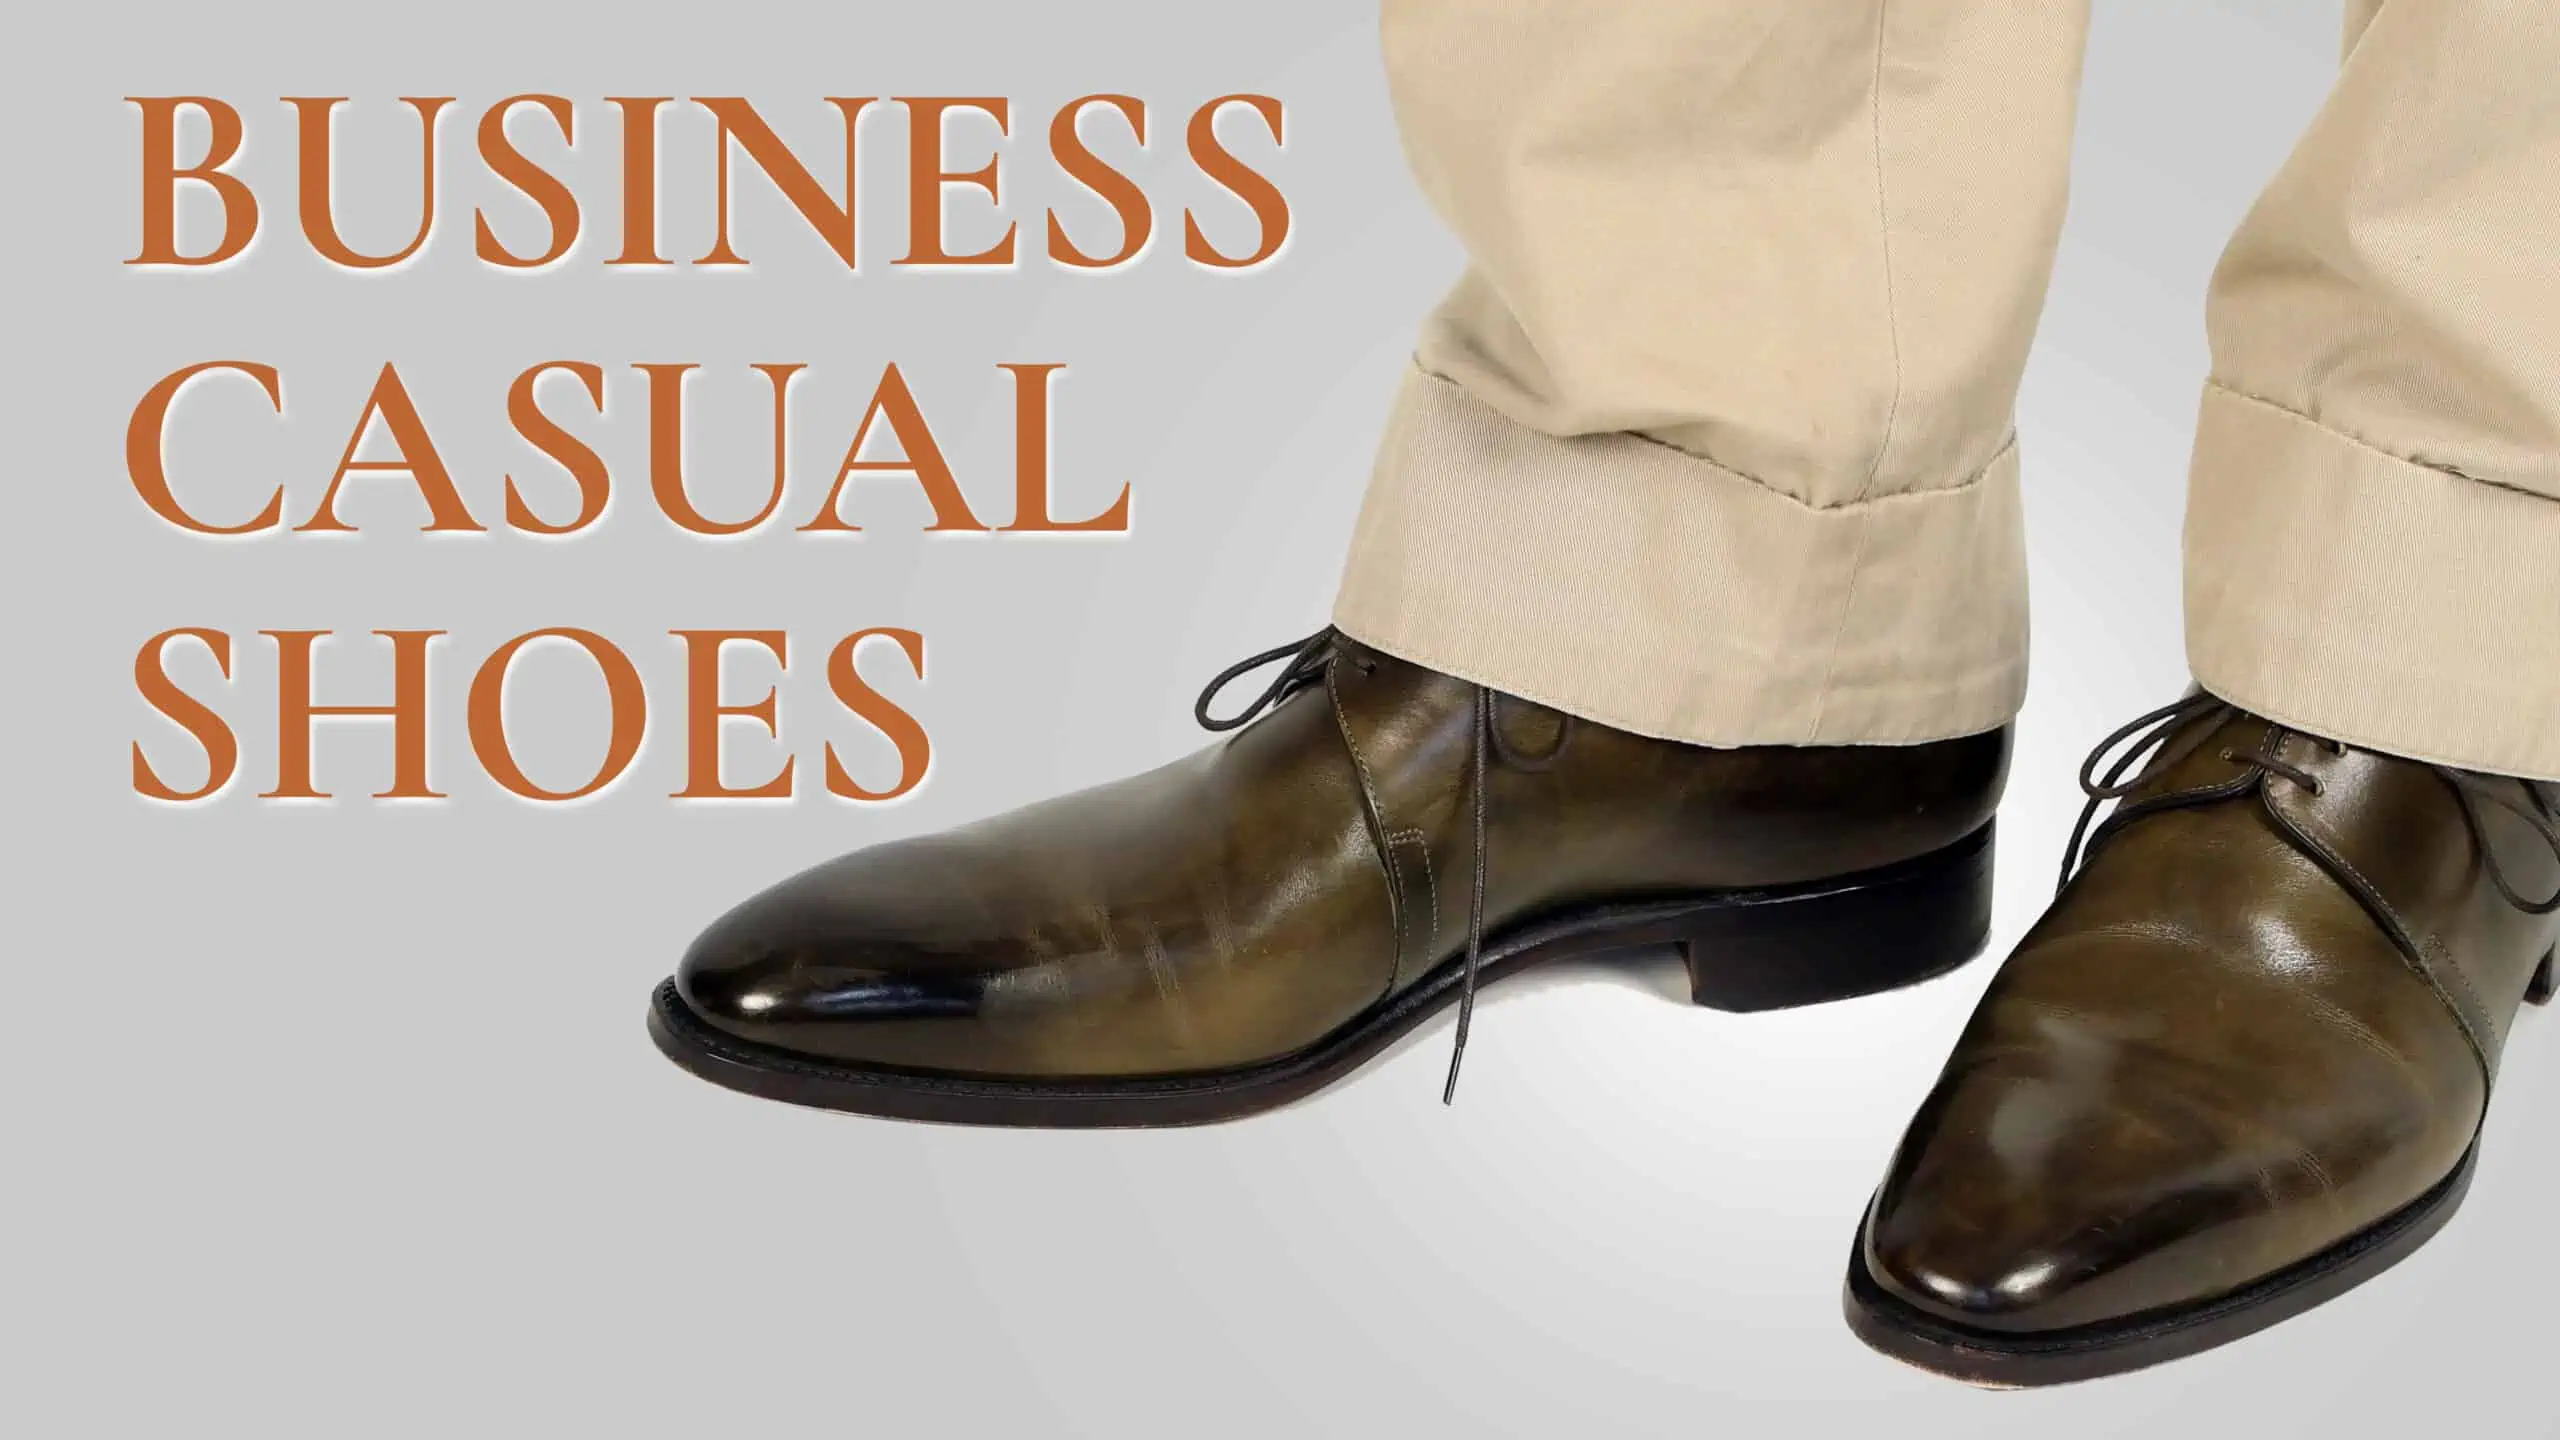 Men Leather Shoes Business Dress Shoes Casual Shoes Footwear Wear-Resistant